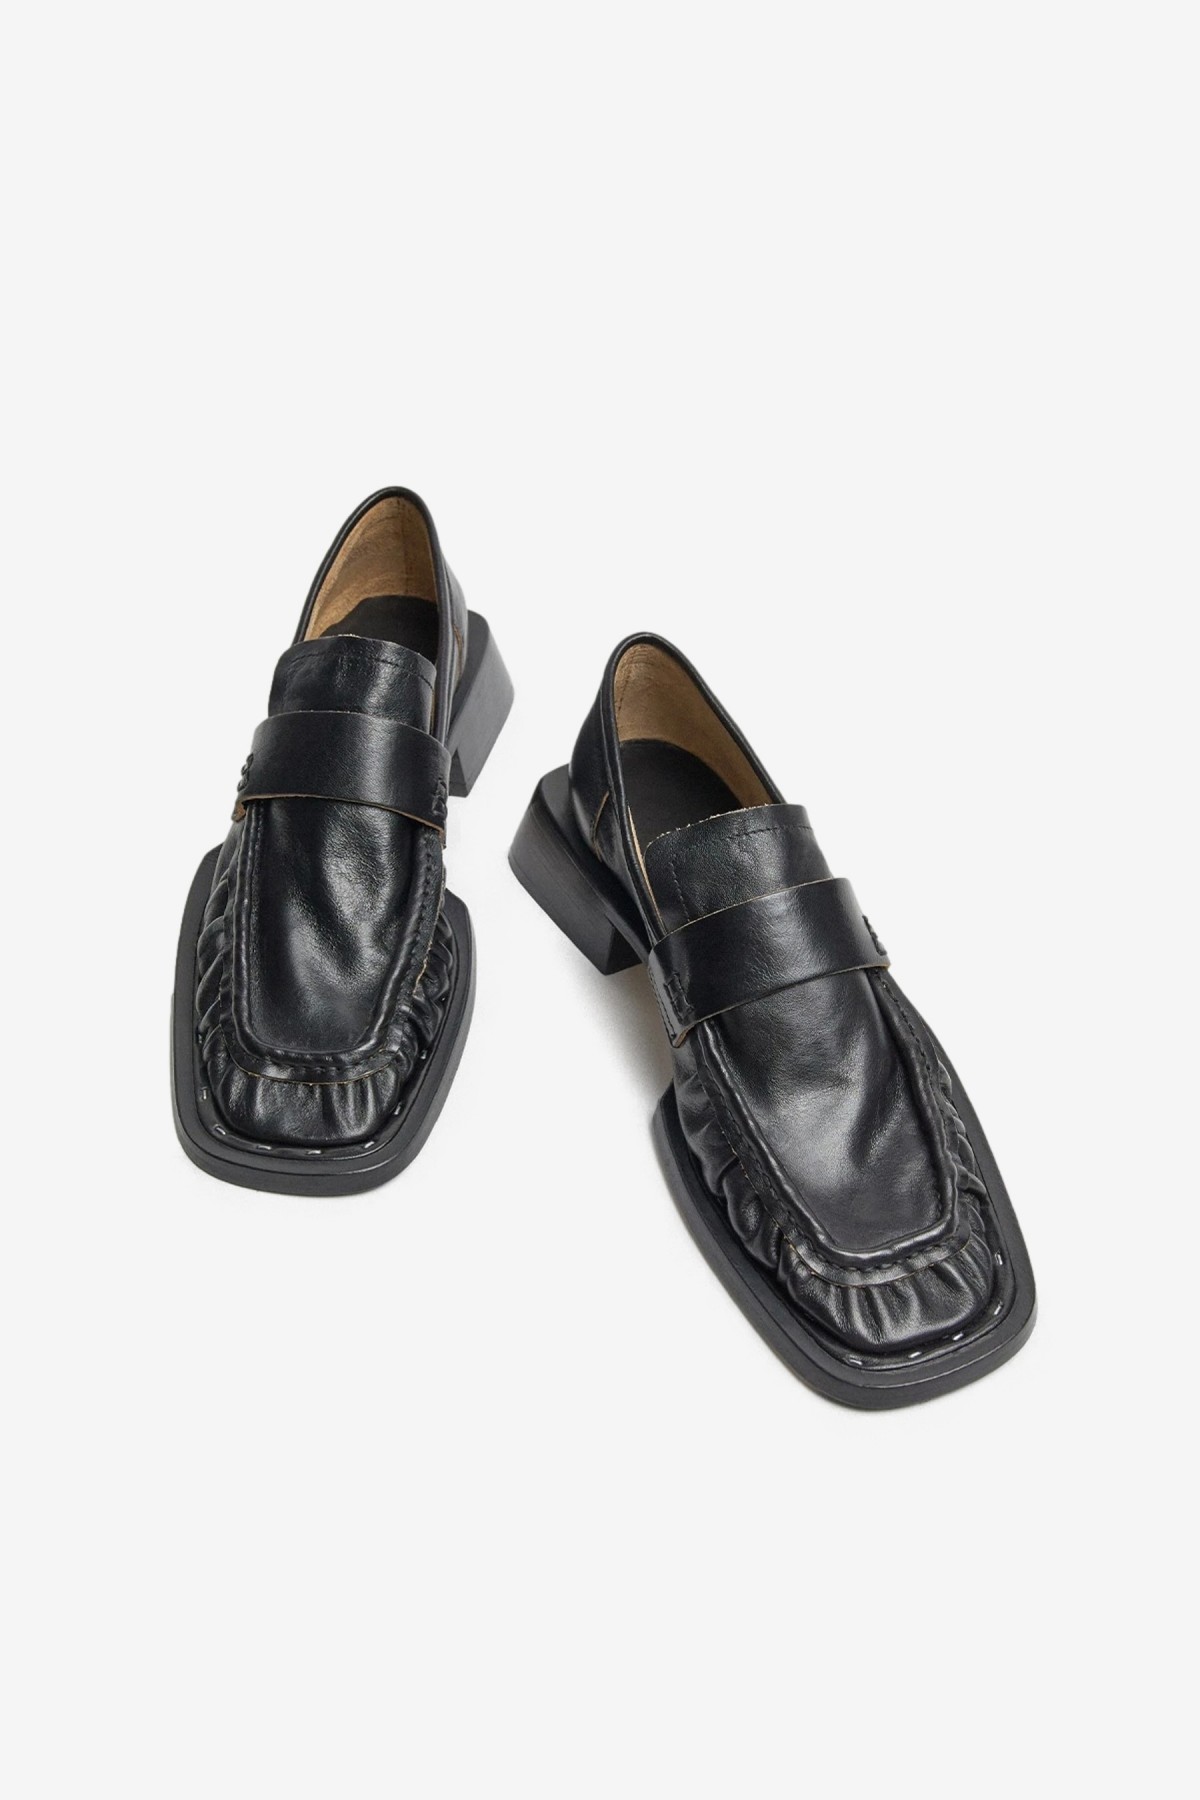 Miista Airi Loafers in Black